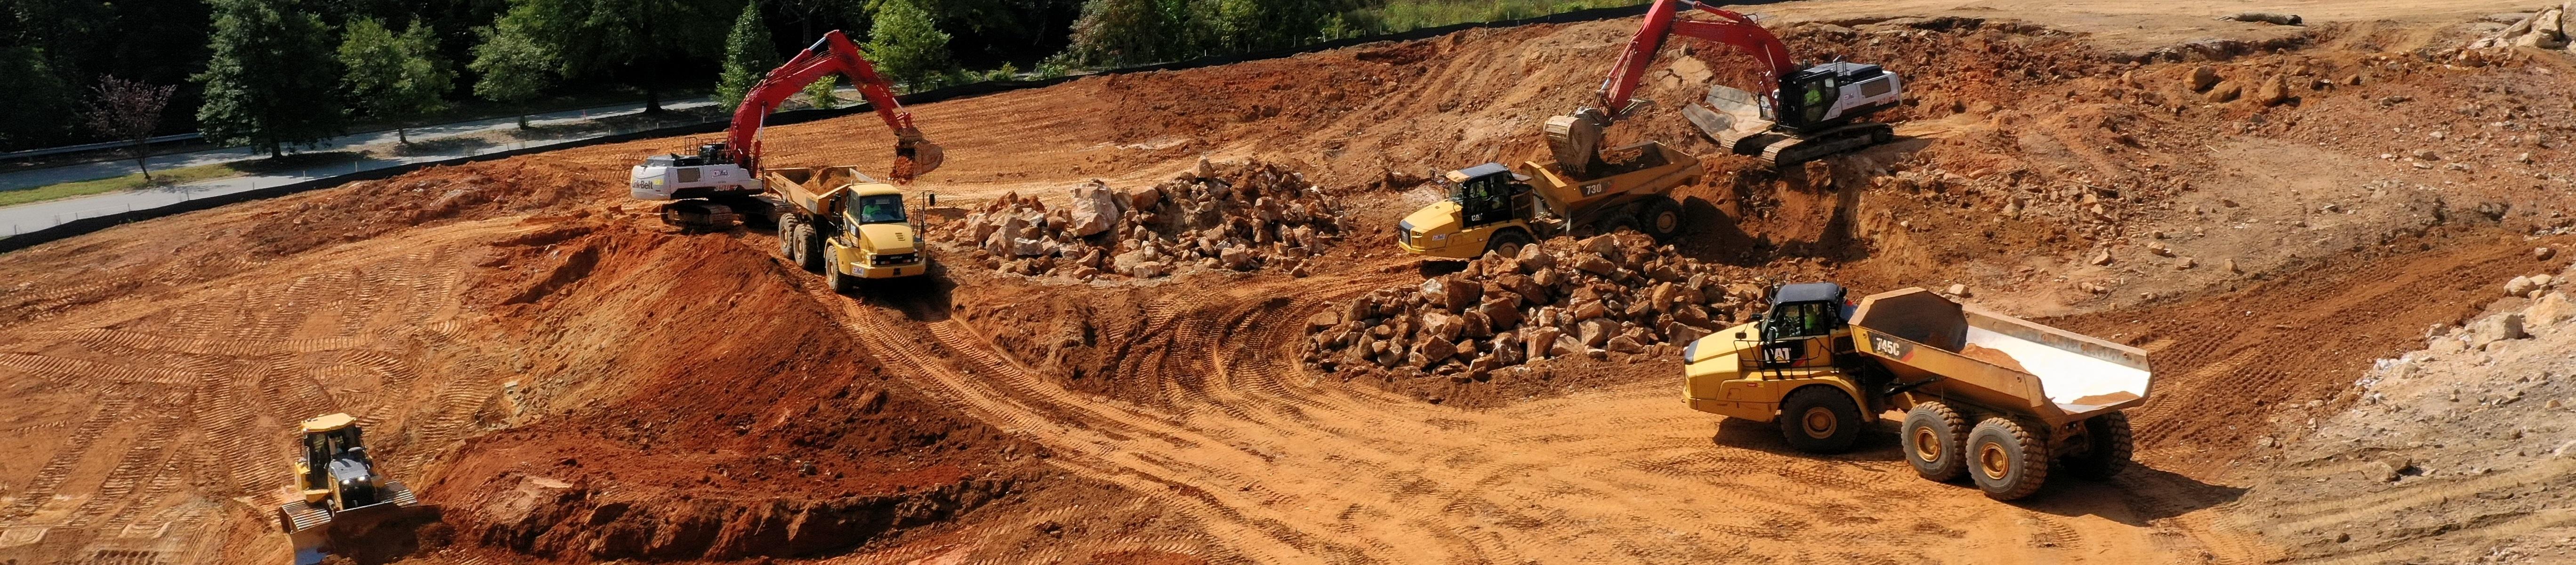 Excavators on Construction Site